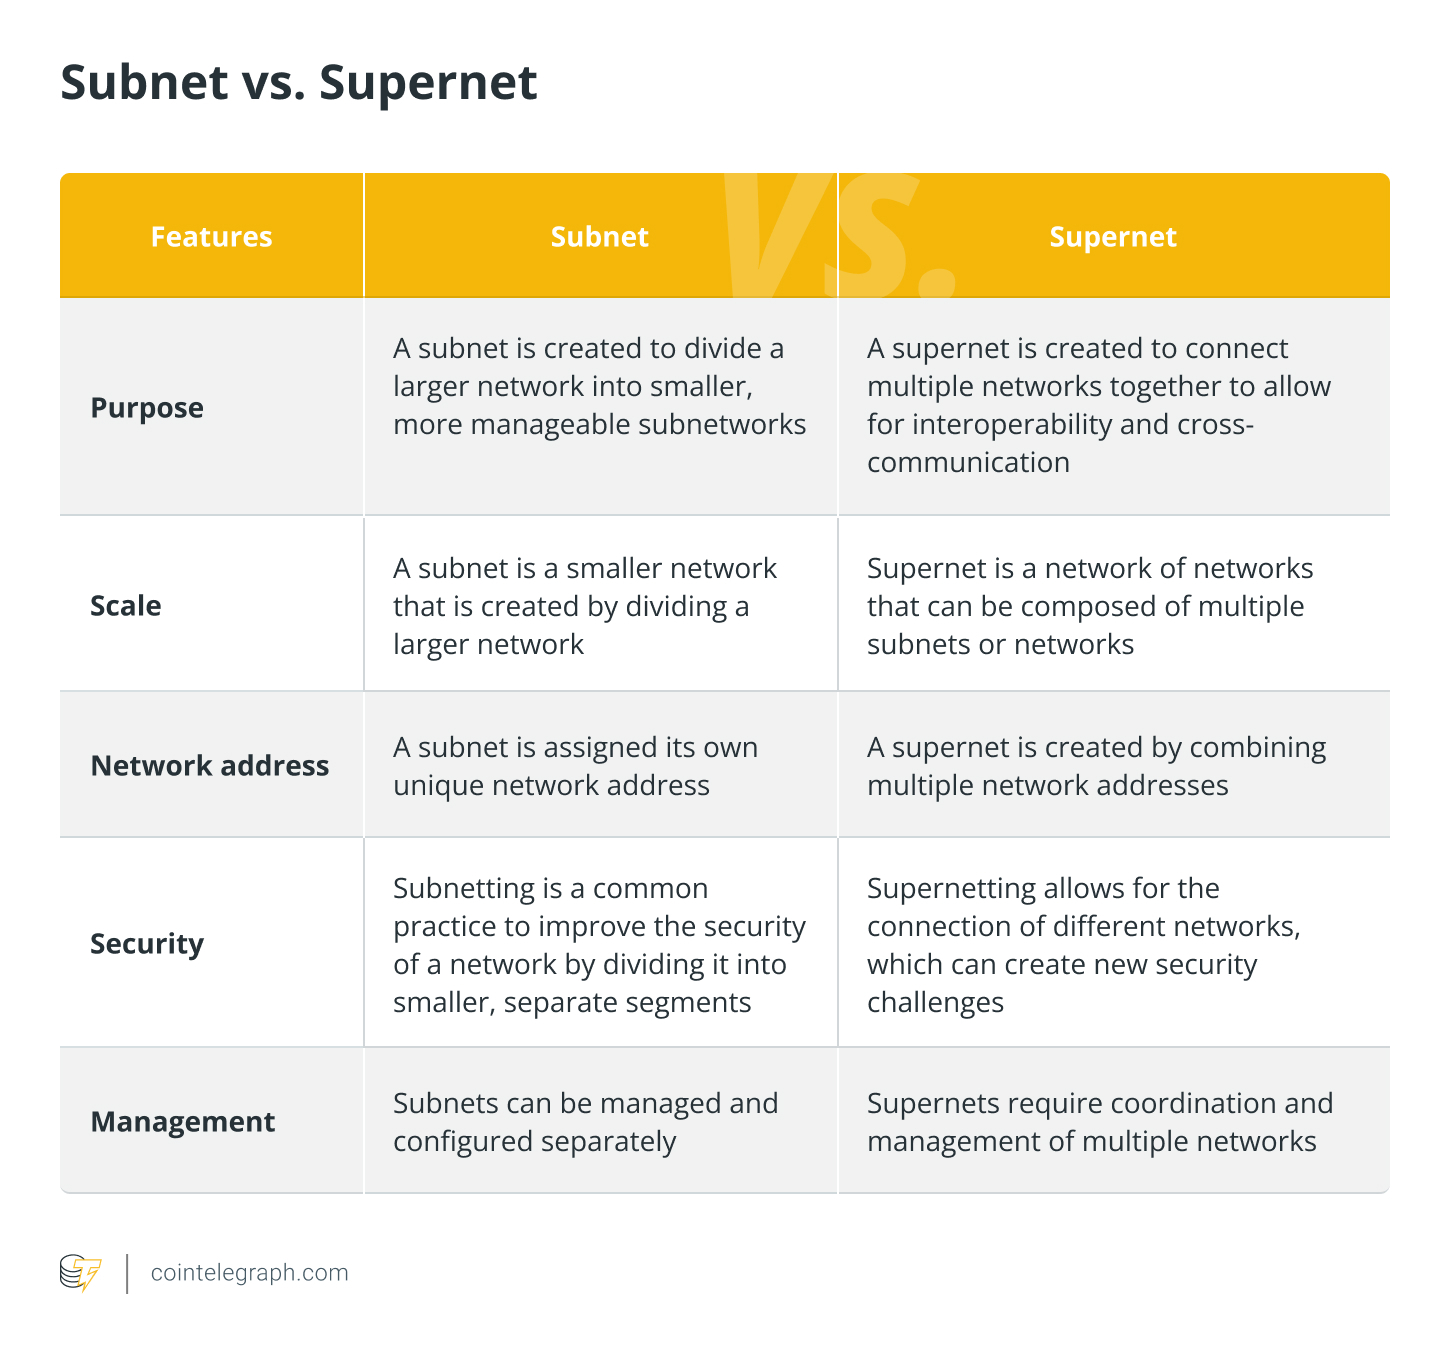 Subnet vs Supernet